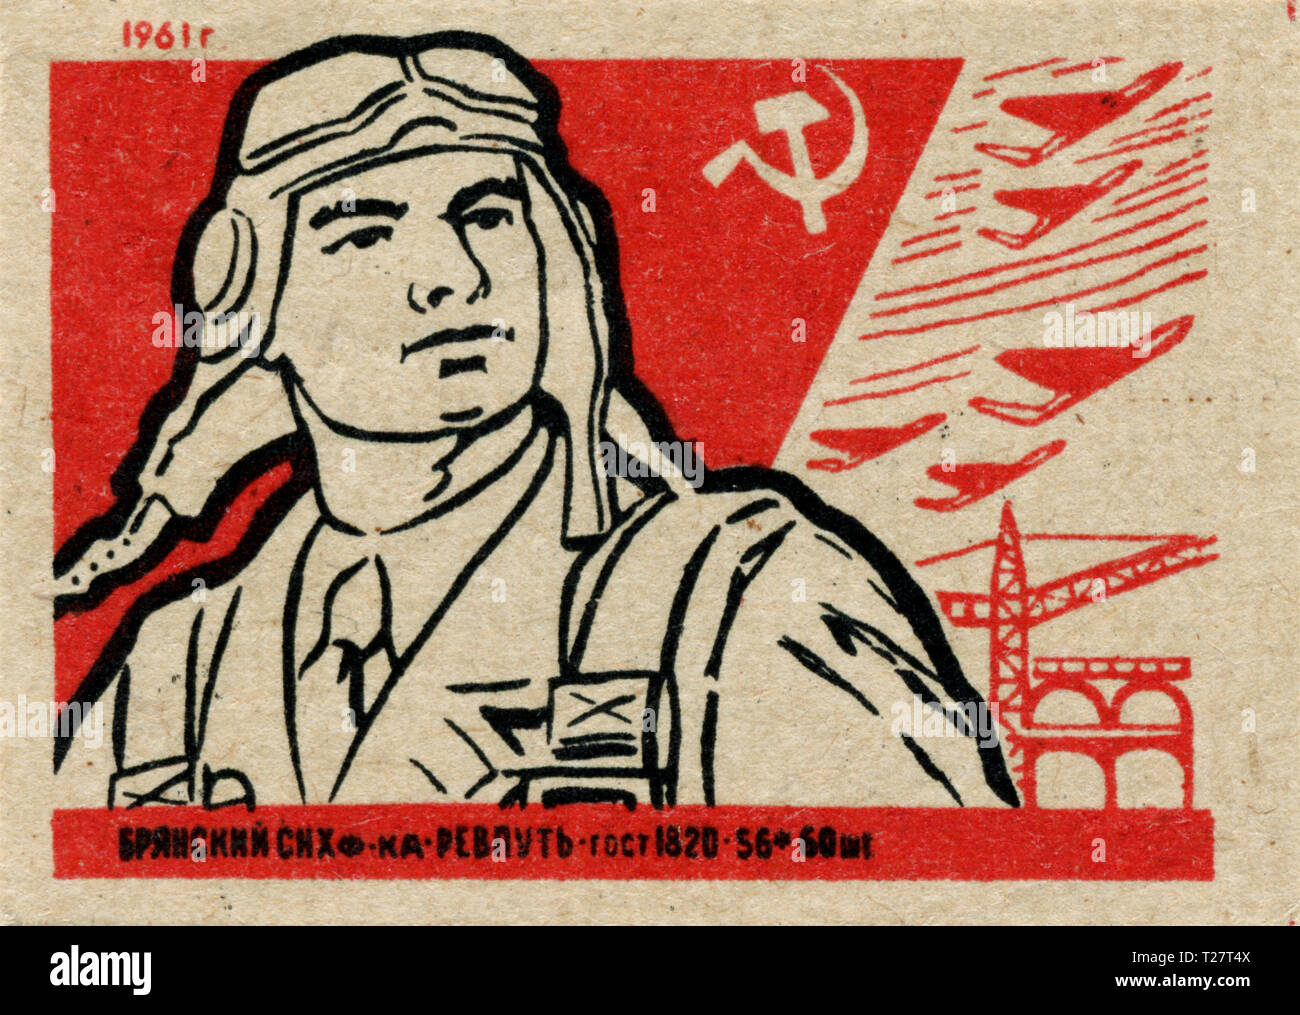 Russia - 1961: Soviet Union propaganda, matchbox graphics collection, USSR Army Stock Photo